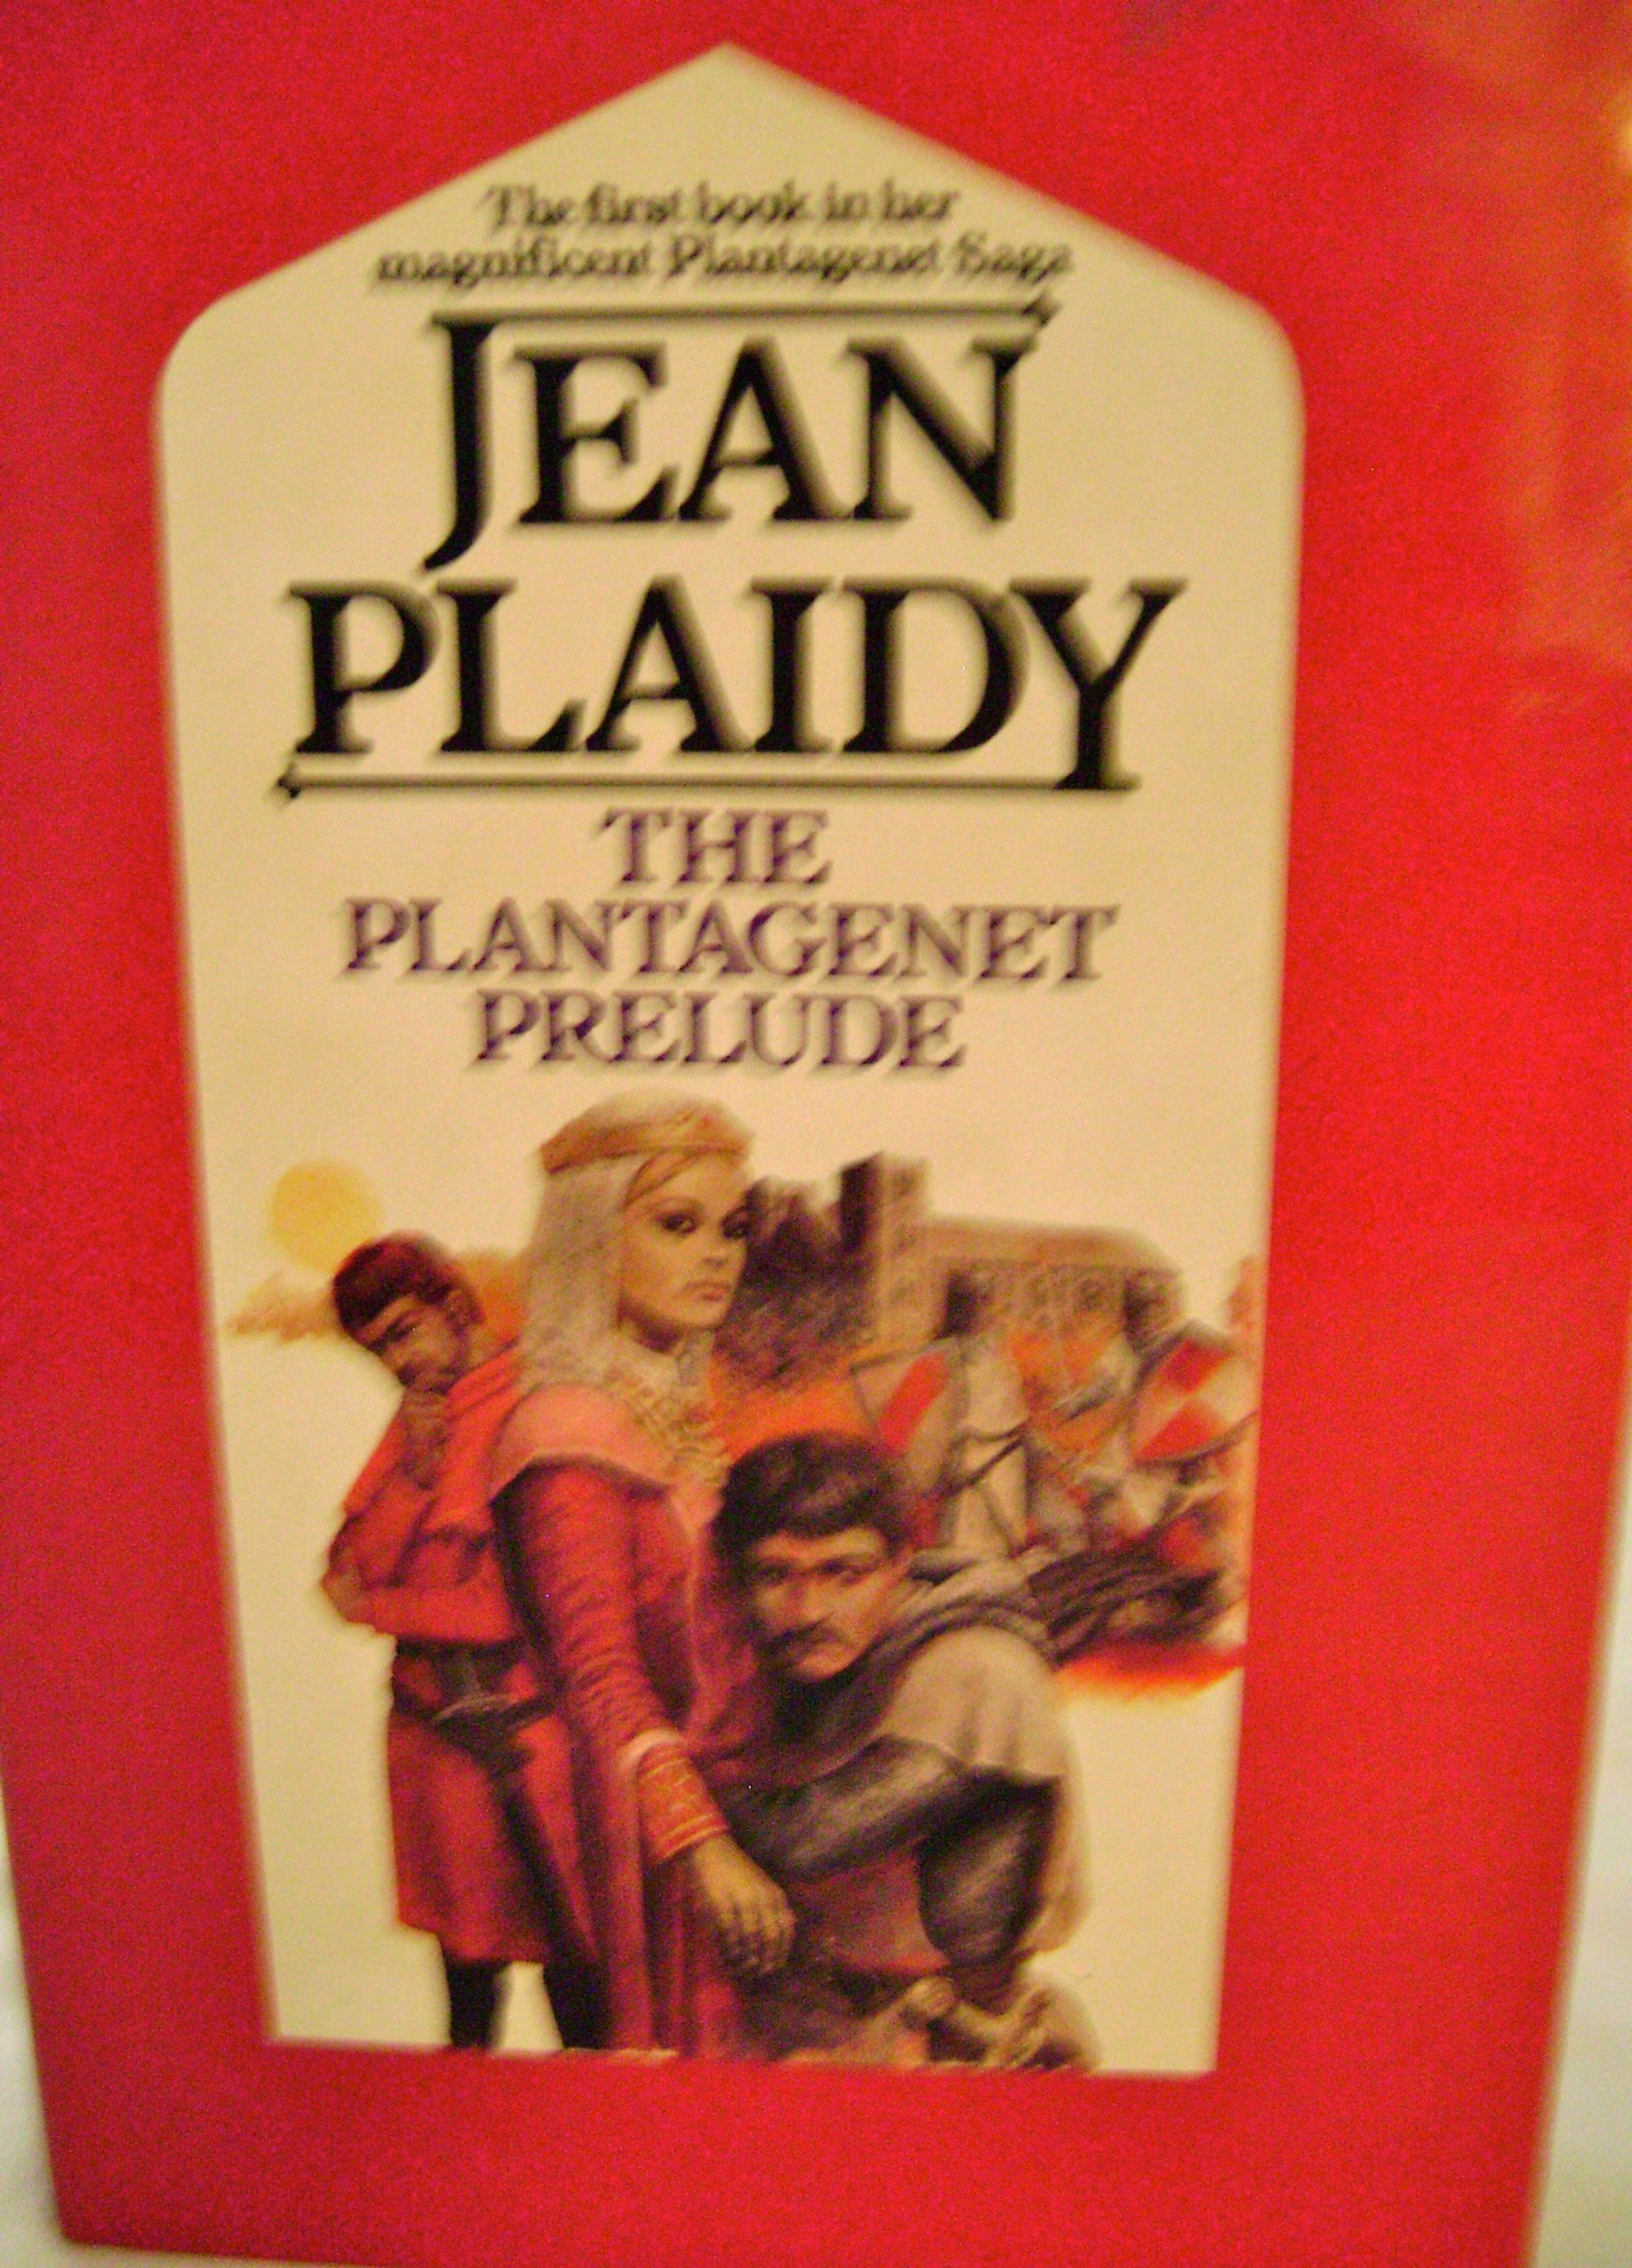 The Plantagenet prelude